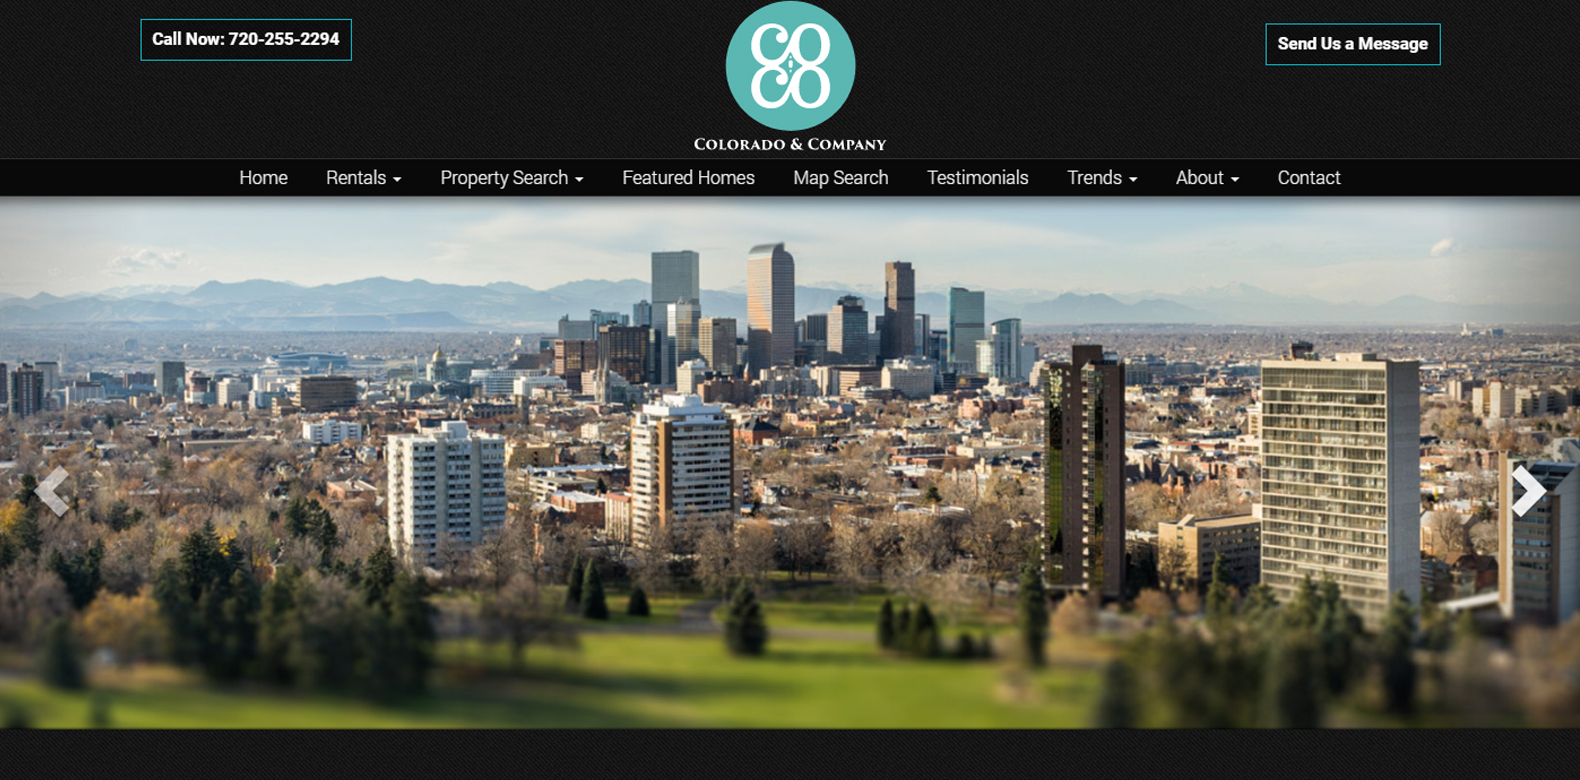 
New Website Upgrade: Colorado & Company